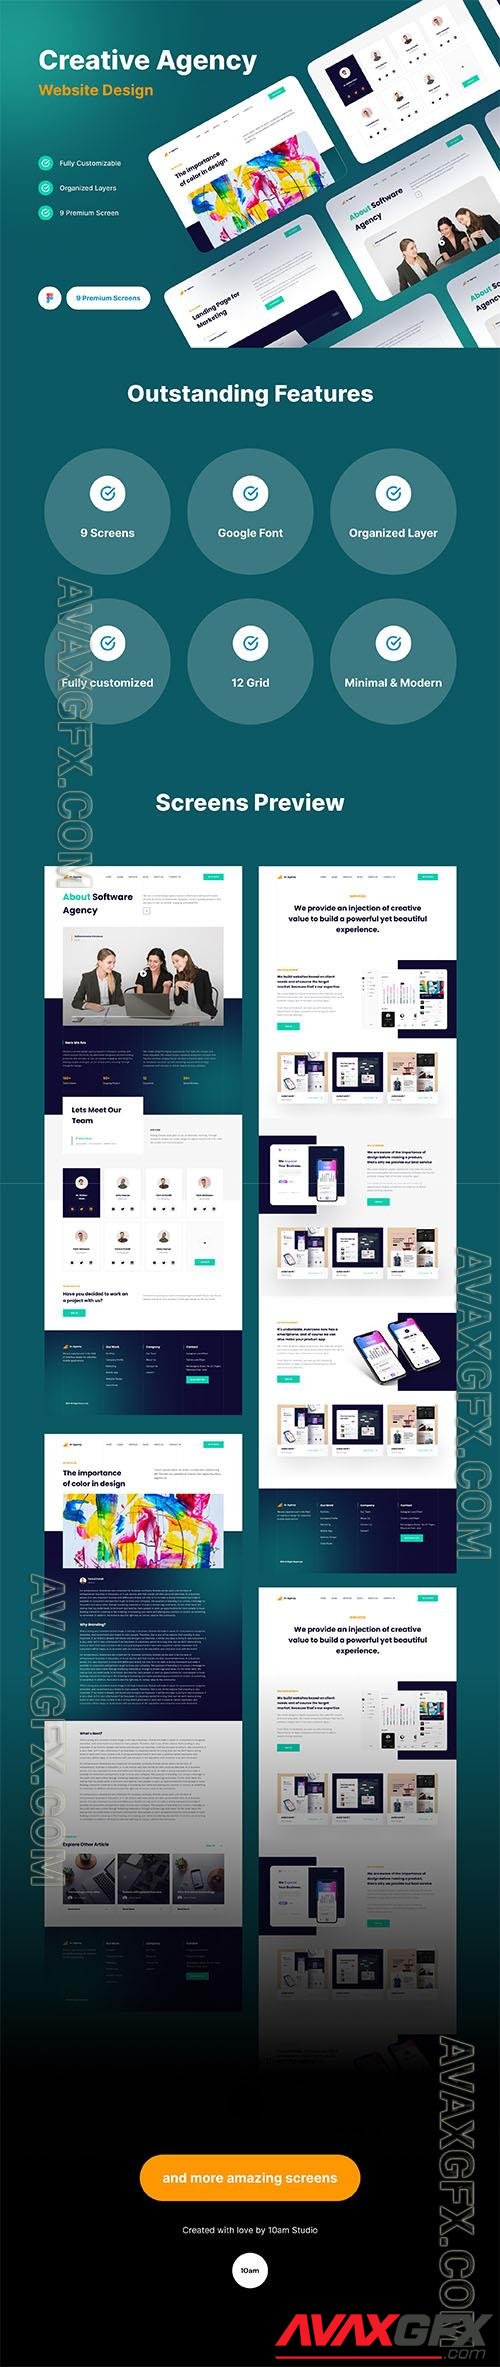 Creative Agency - Website Design UI-Kit